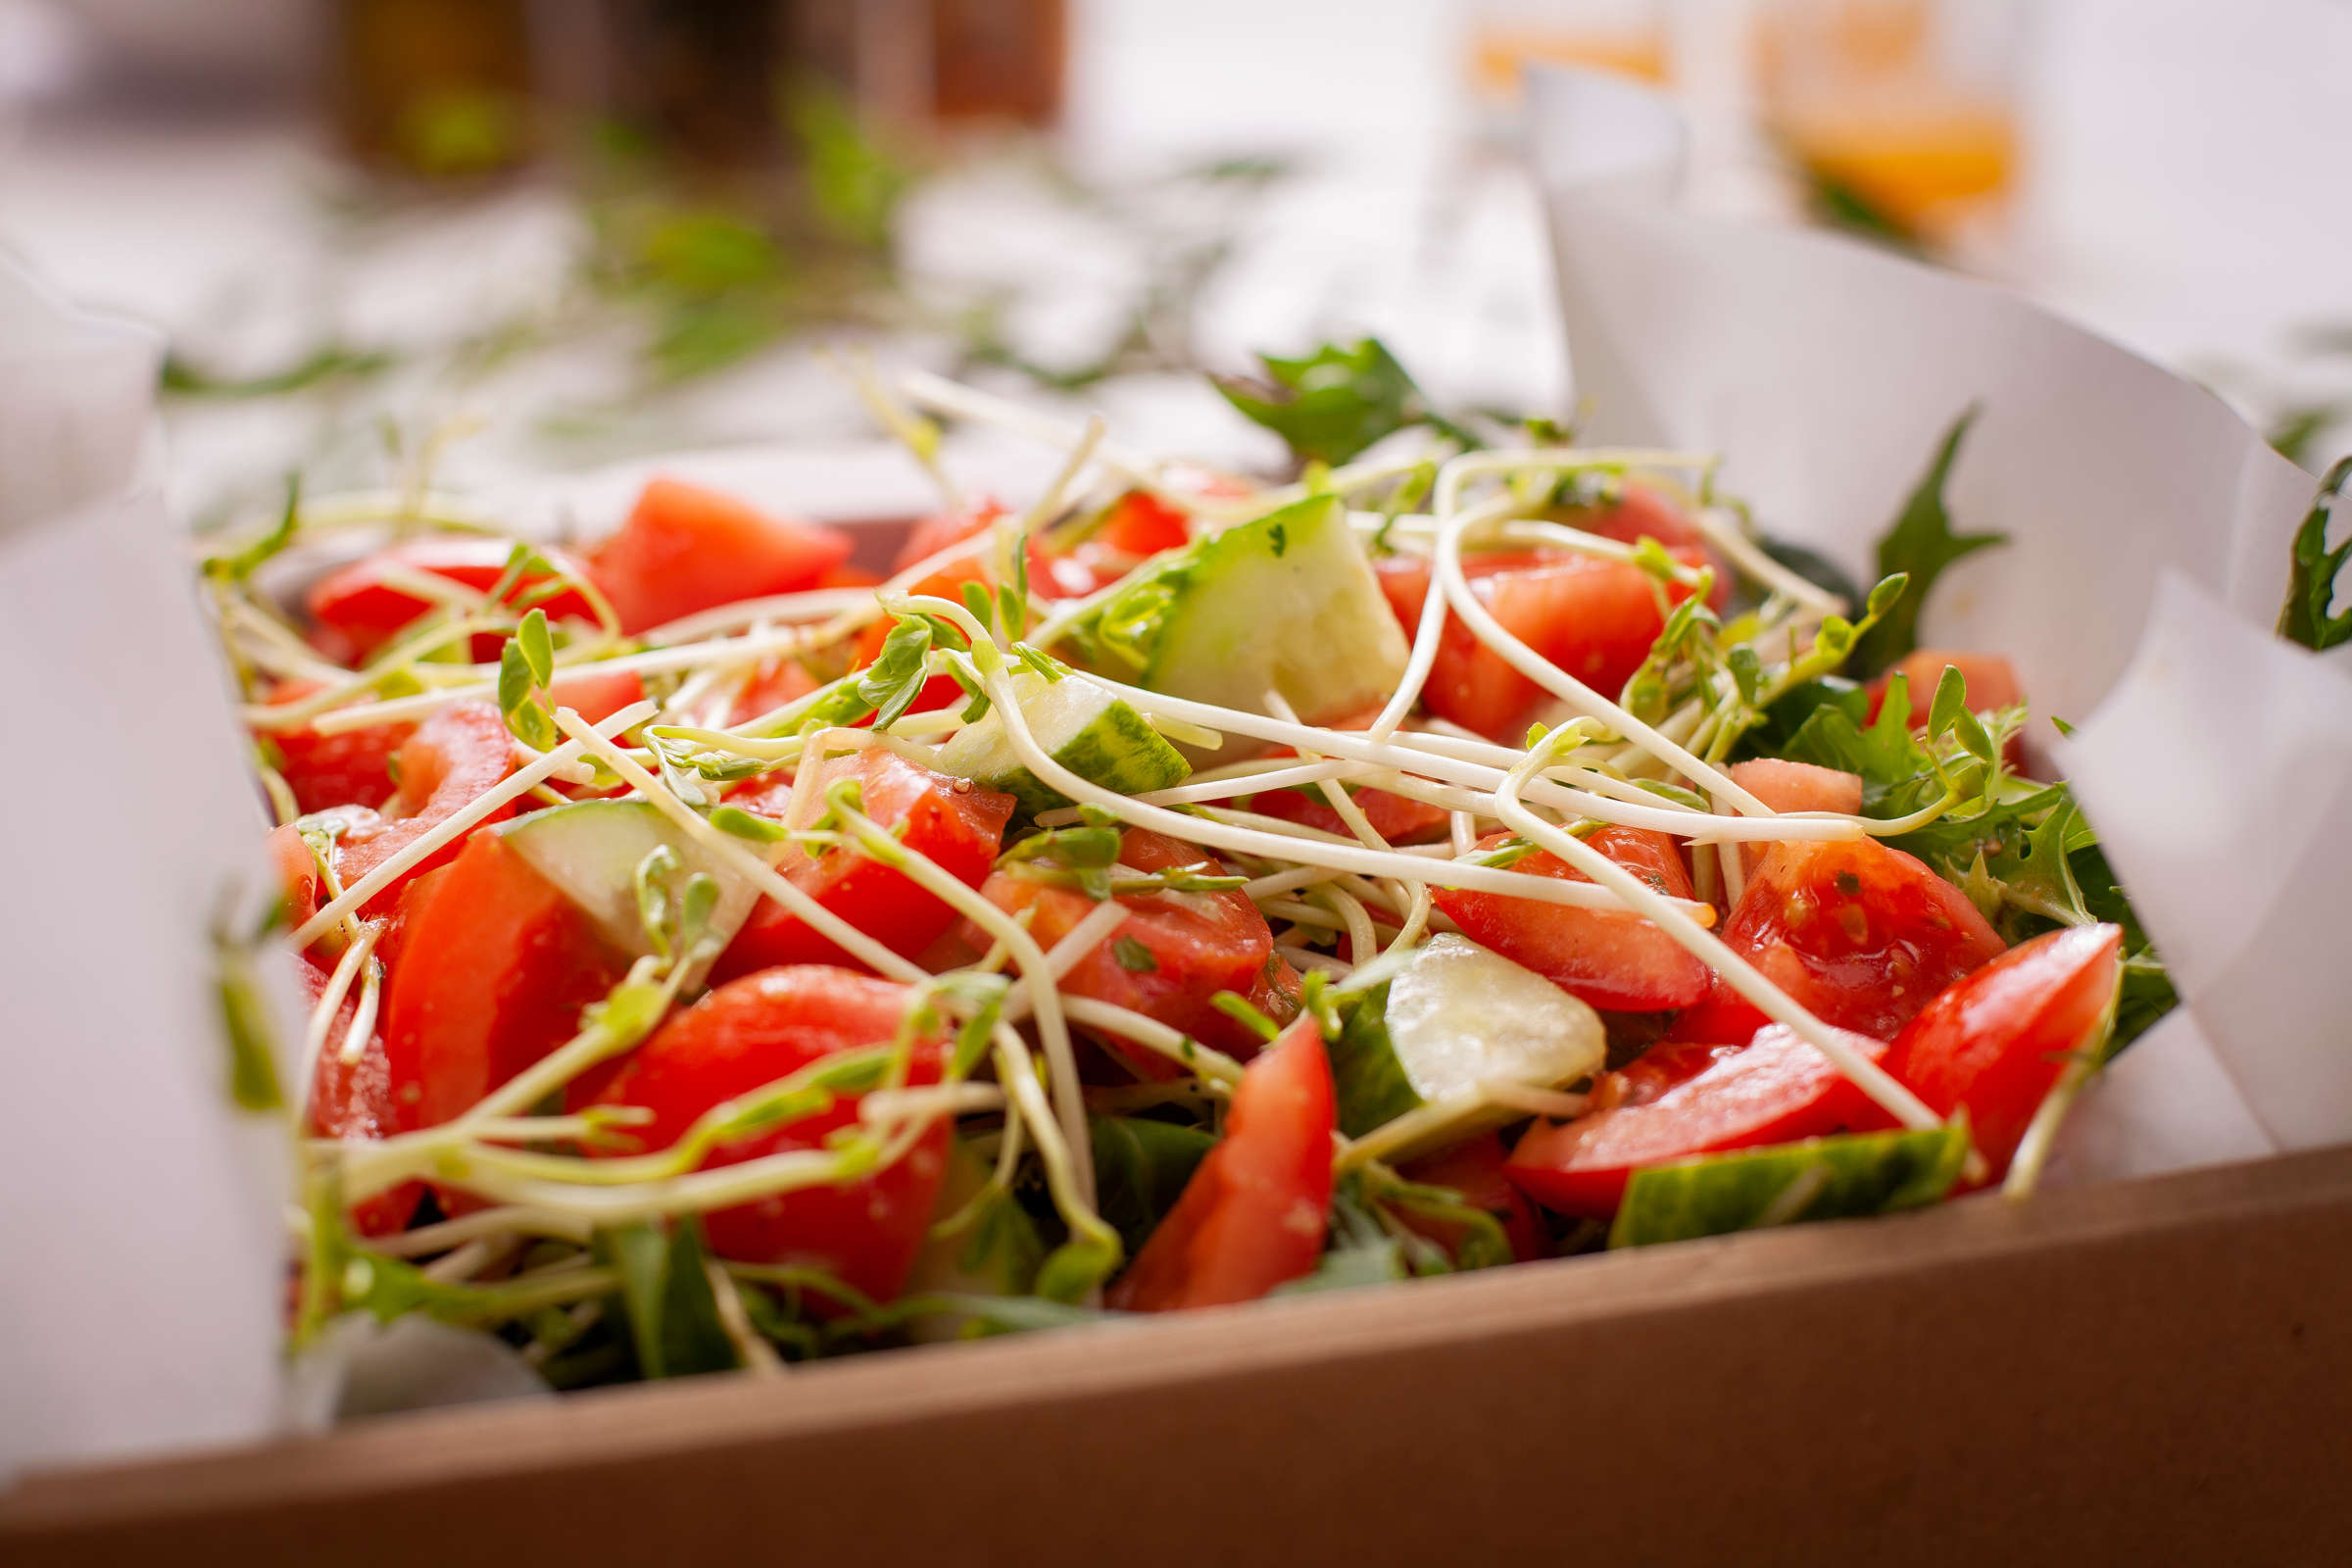 Garden salad catering box including lettuce, tomato, cucumber, and vinaigrette dressing. Credit: Richard Jupe.